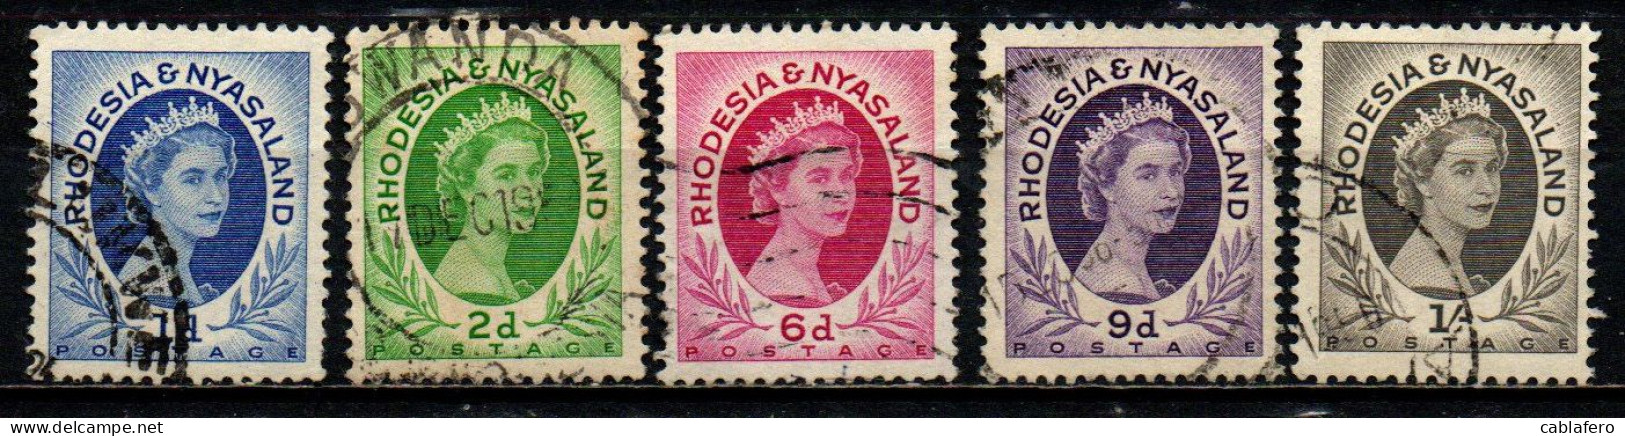 RHODESIA AND NYASALAND - 1954 - EFFIGIE DELLA REGINA ELISABETTA II - USATI - Rhodesia & Nyasaland (1954-1963)